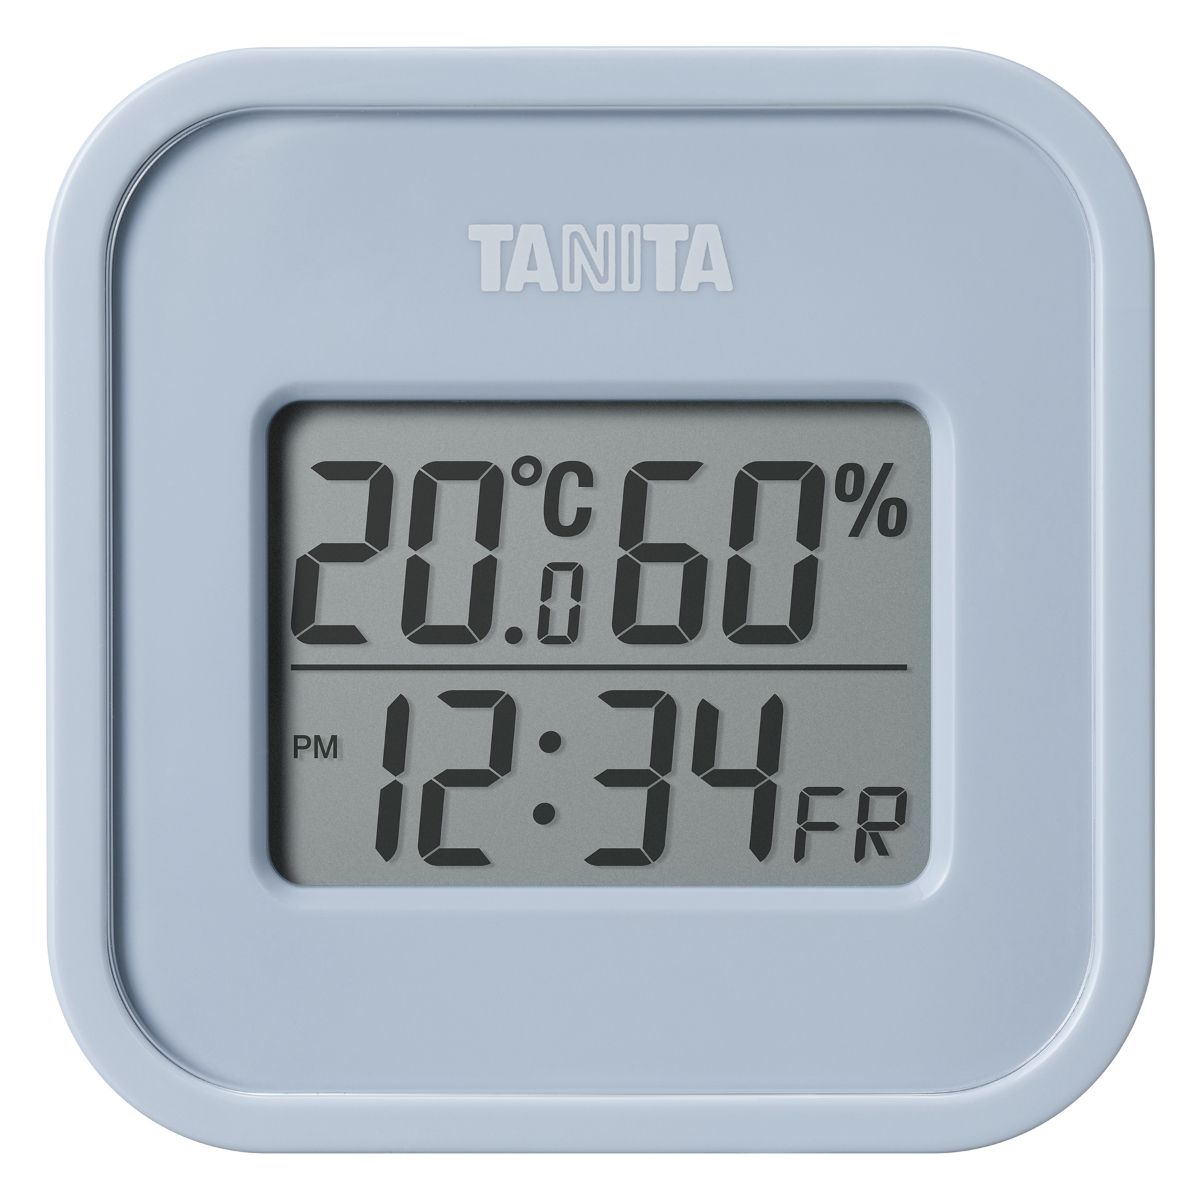 TANITA 温湿度計 ブルーグレー